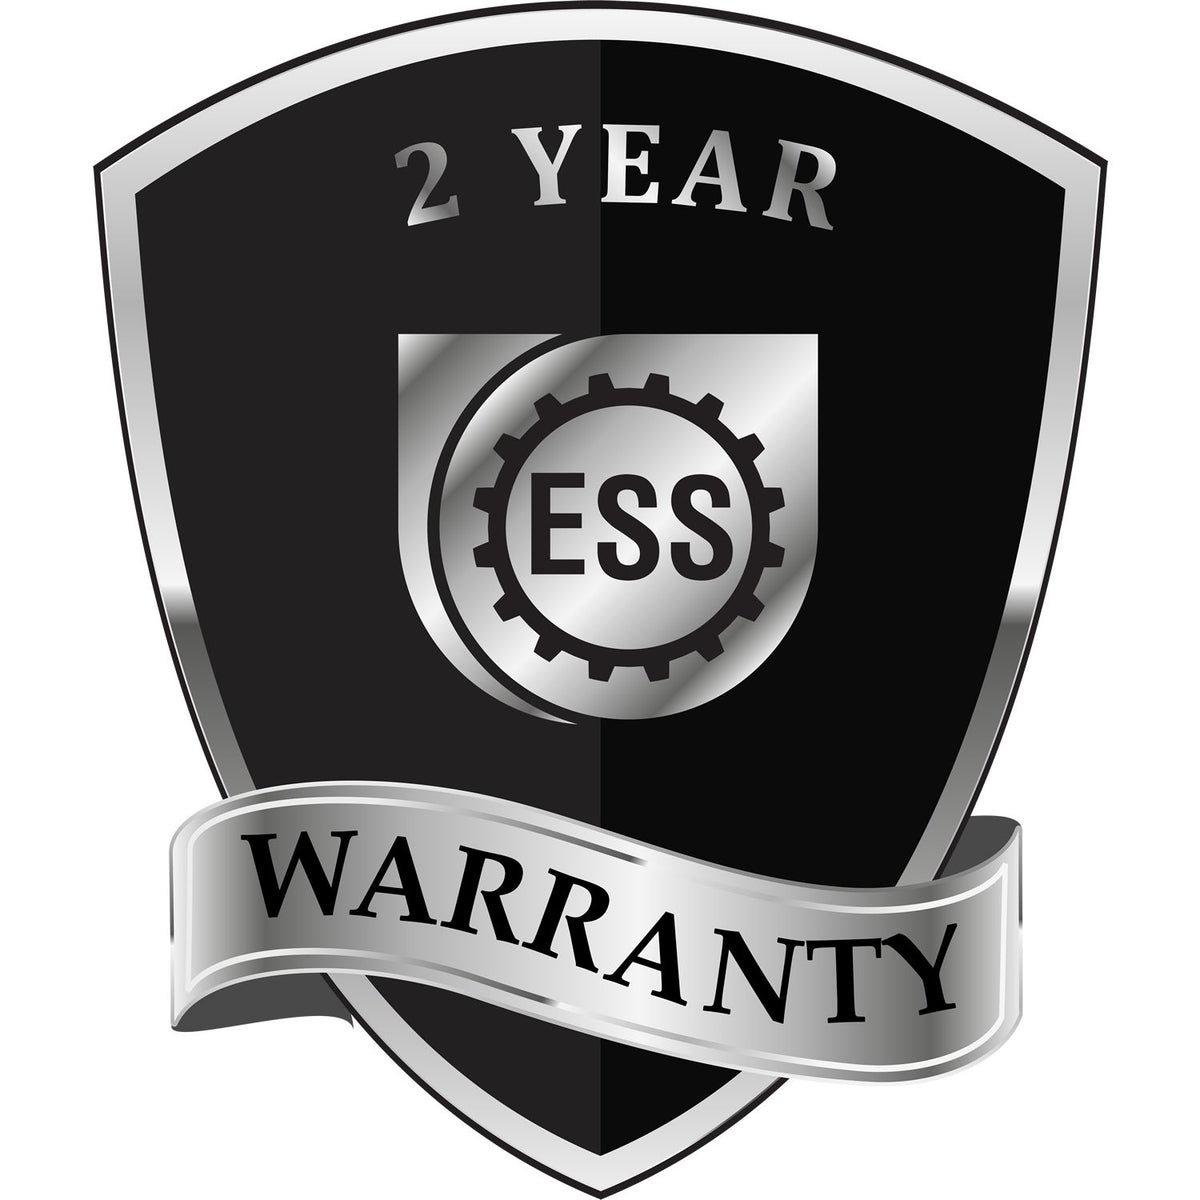 A black and silver badge or emblem showing warranty information for the Handheld Kansas Professional Geologist Embosser